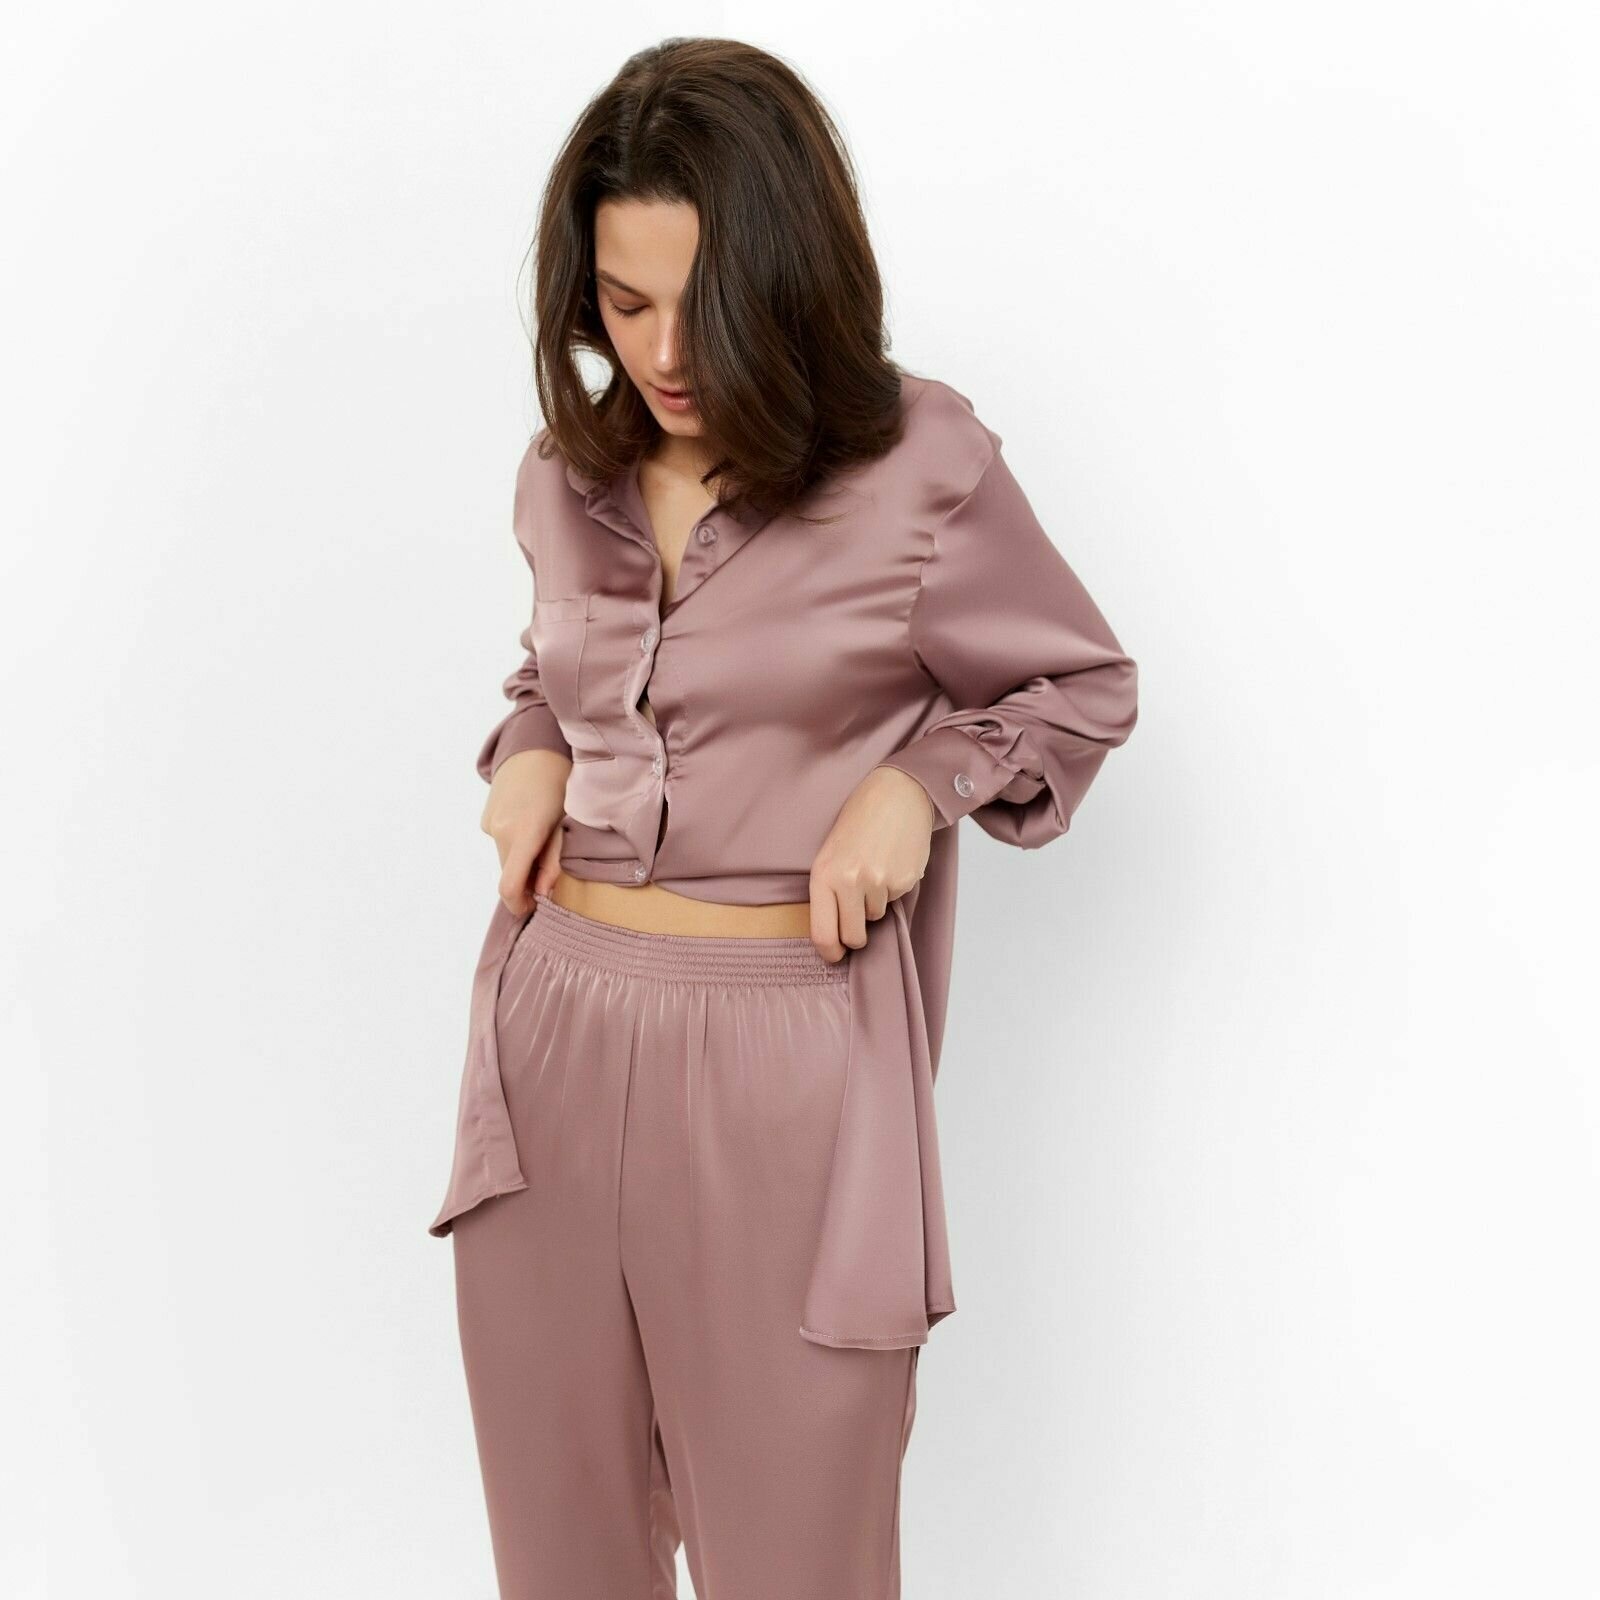 MINAKU Комплект (сорочка, брюки) женский MINAKU: Light touch цвет темно-розовый, р-р 54 - фотография № 4